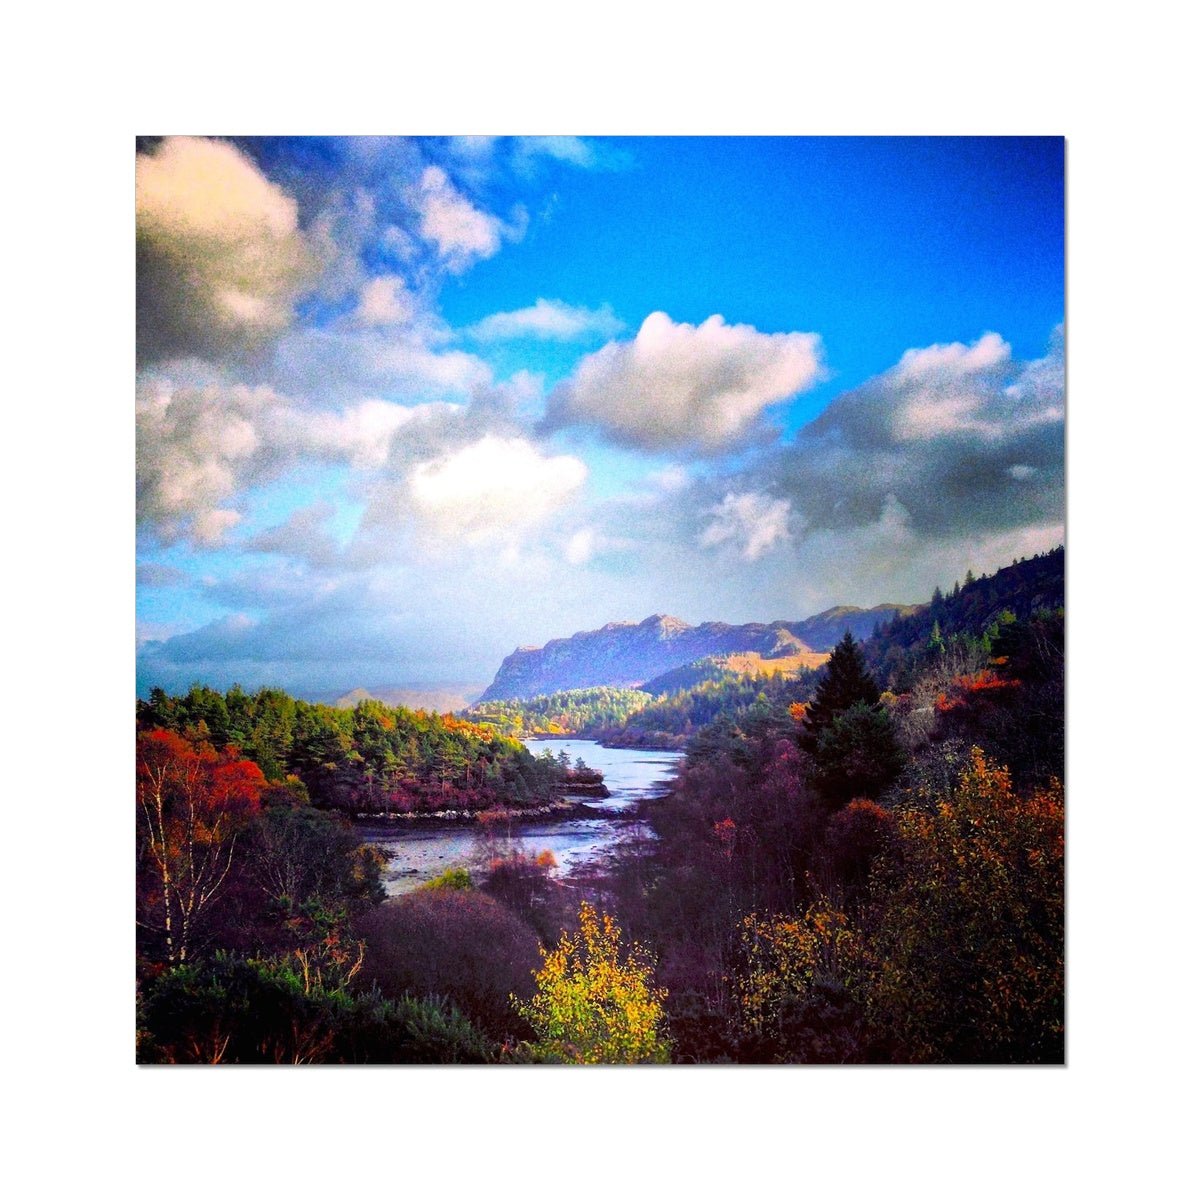 Plockton Scottish Highlands Painting | Fine Art Prints From Scotland-Unframed Prints-Scottish Highlands & Lowlands Art Gallery-24"x24"-Paintings, Prints, Homeware, Art Gifts From Scotland By Scottish Artist Kevin Hunter